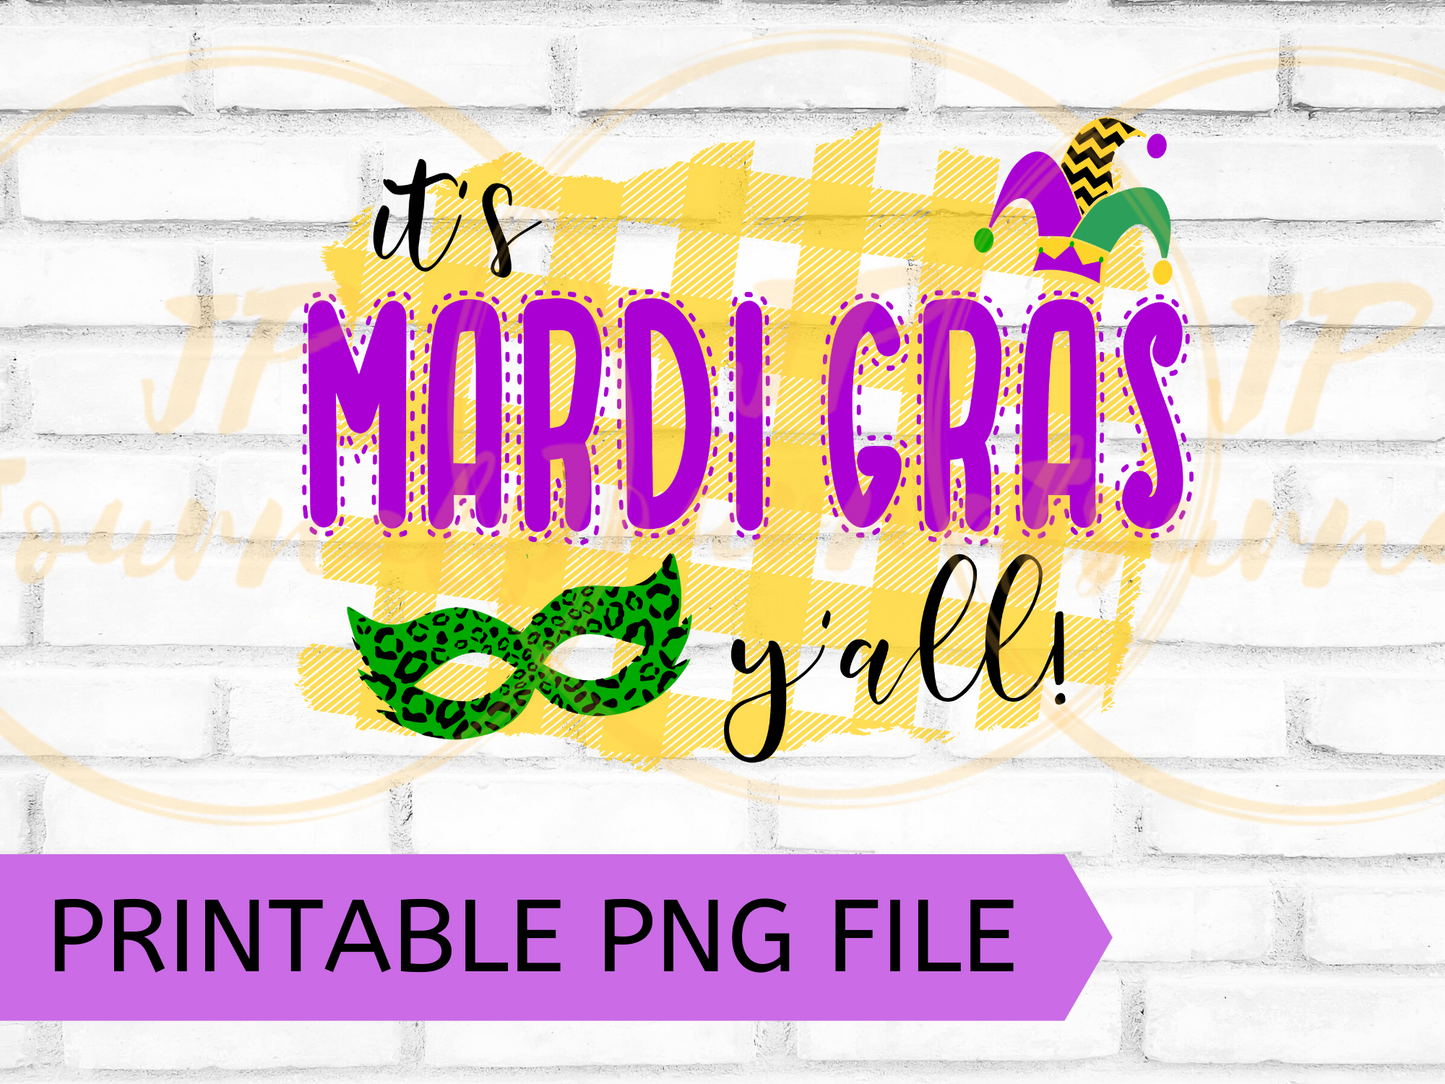 Mardi Gras Clip Art Sublimation Design - DIY Printable Artwork Digital Download - PNG File Only! - It's Mardi Gras Y'all - Southern Sassy